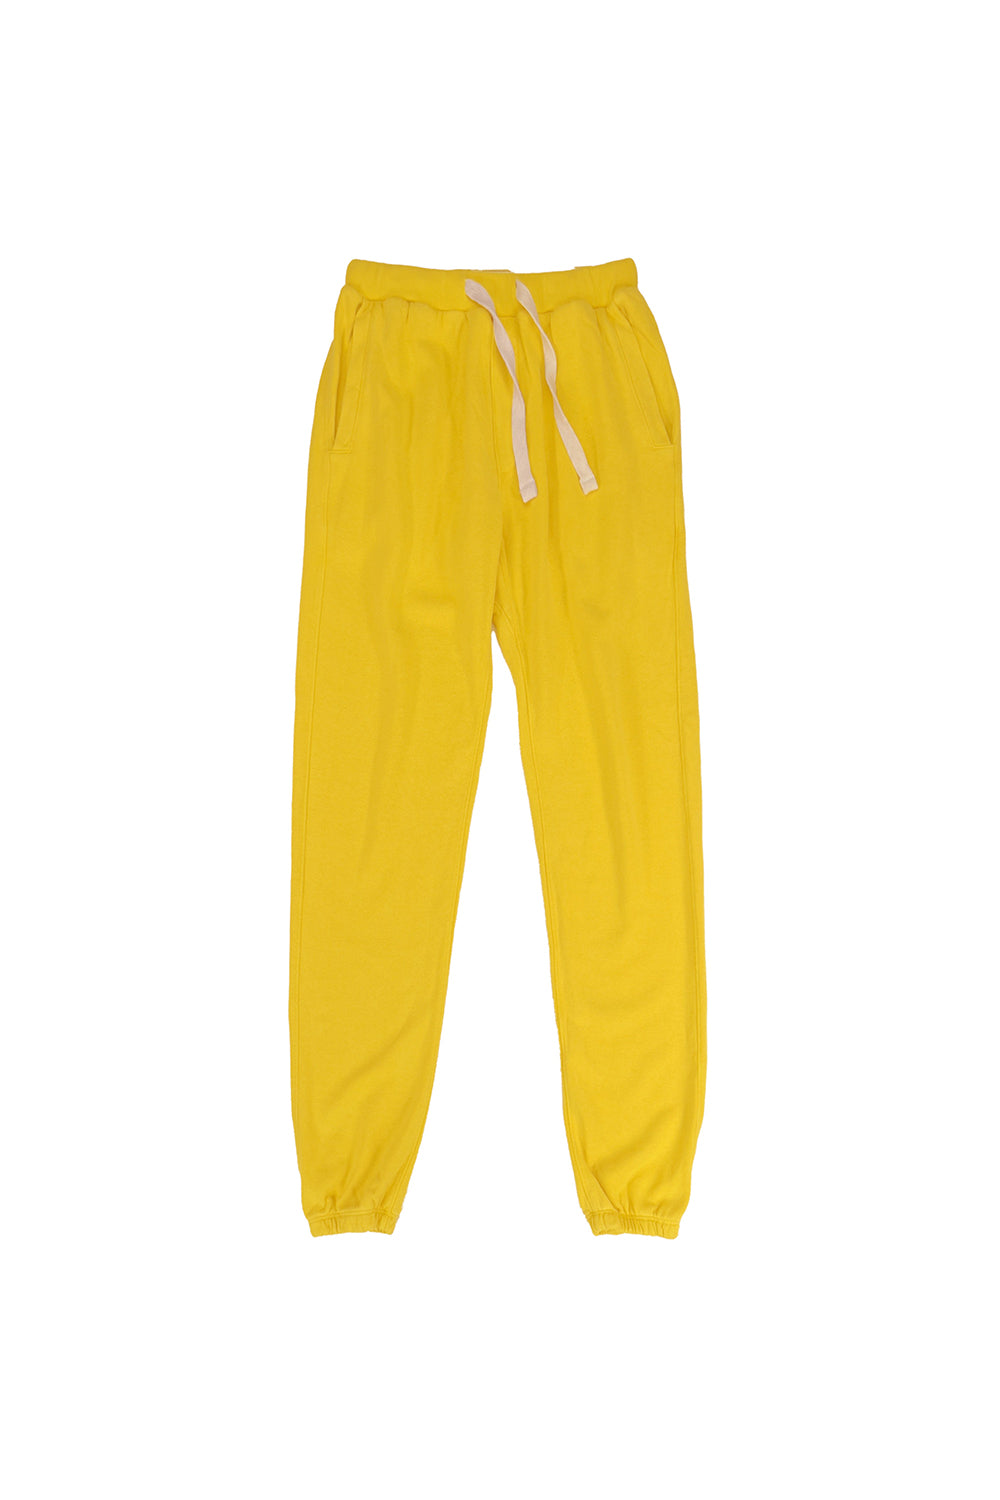 Yelapa Sweatpant - Sale Colors | Jungmaven Hemp Clothing & Accessories / Color: Sunshine Yellow